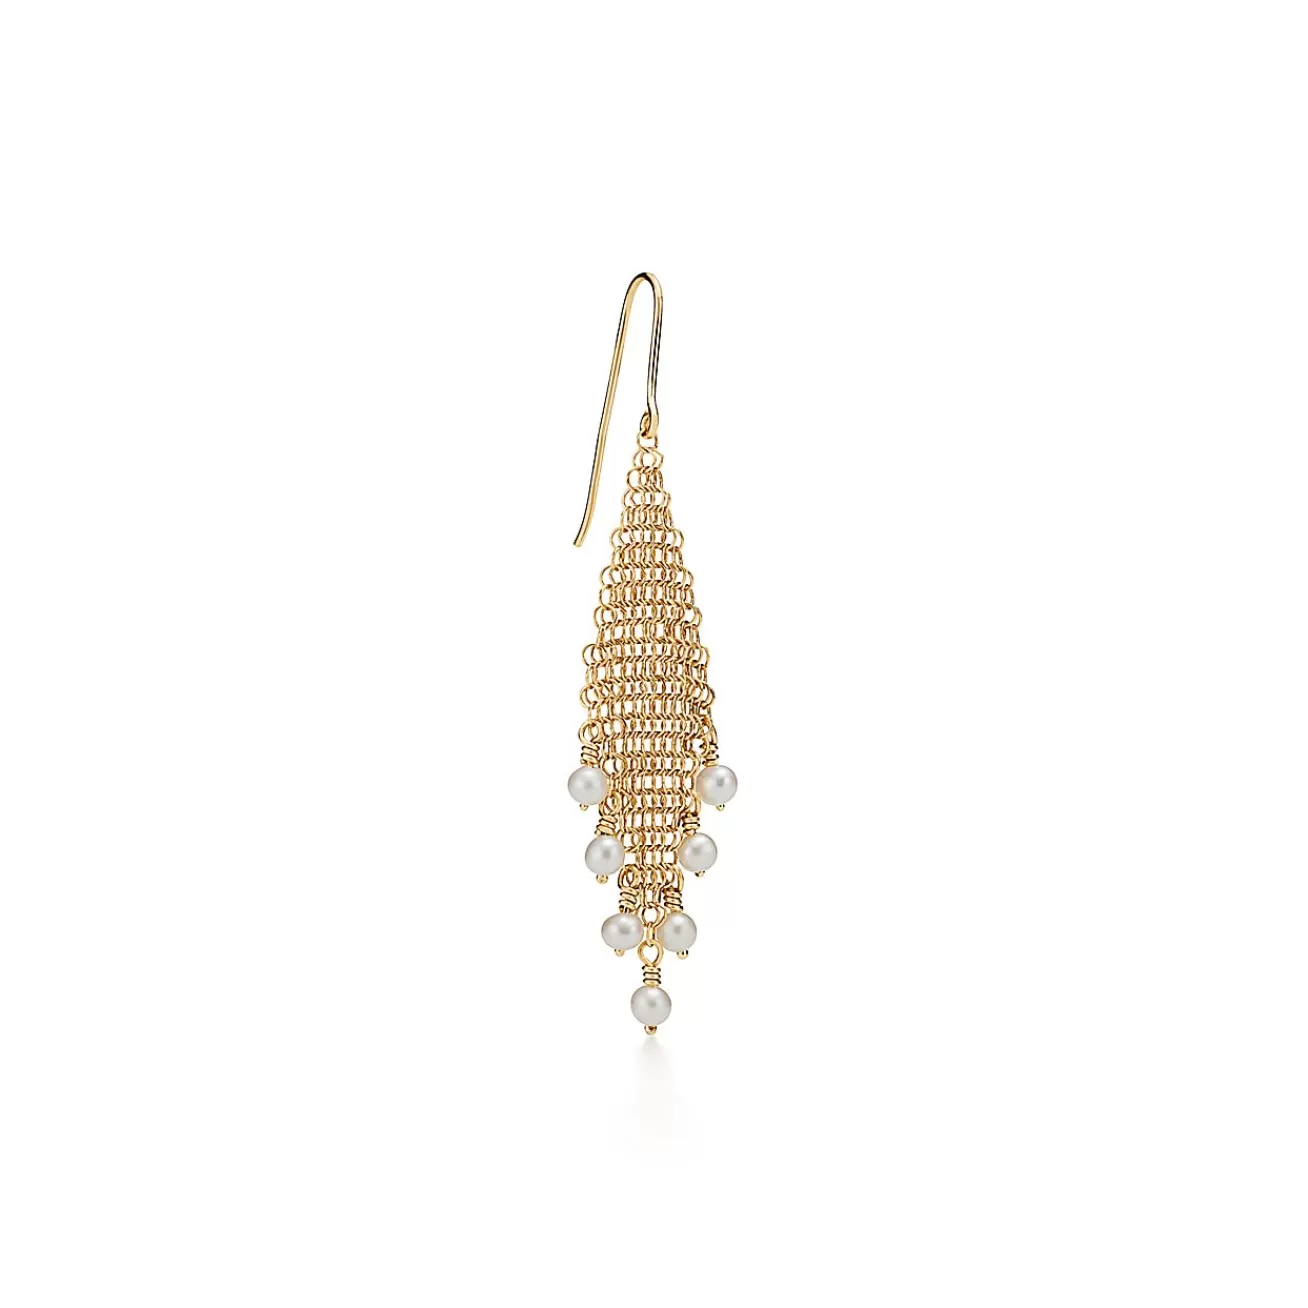 Tiffany & Co. Elsa Peretti® Mesh fringe earrings in 18k gold with freshwater pearls. | ^ Earrings | Gold Jewelry